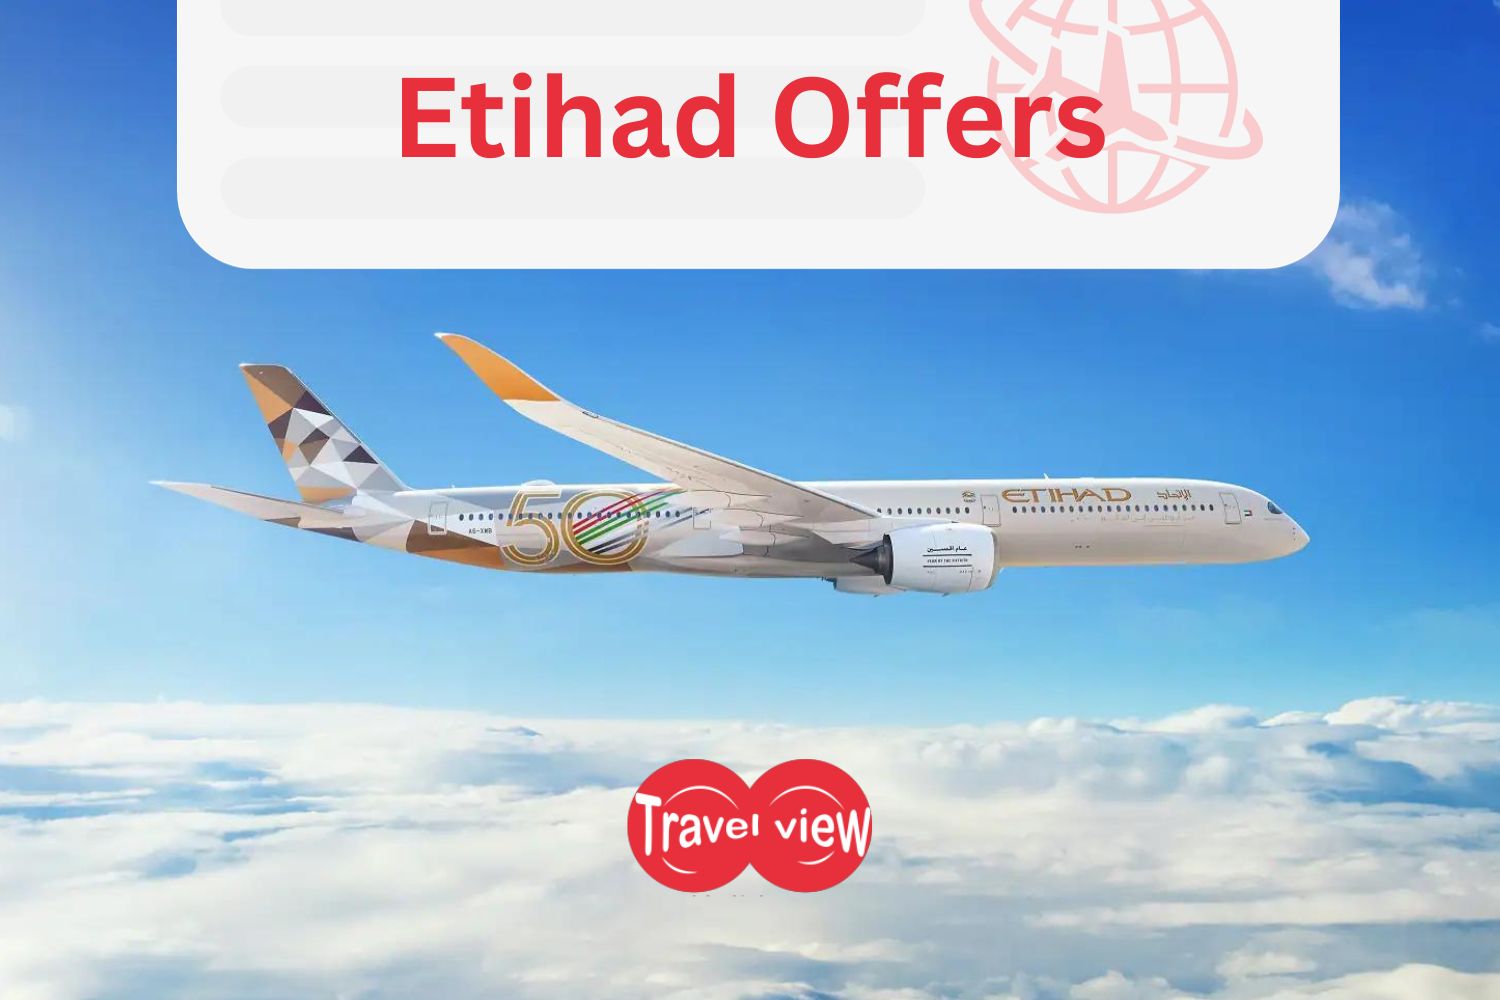 Travel View Flight Offers Etihad Airways